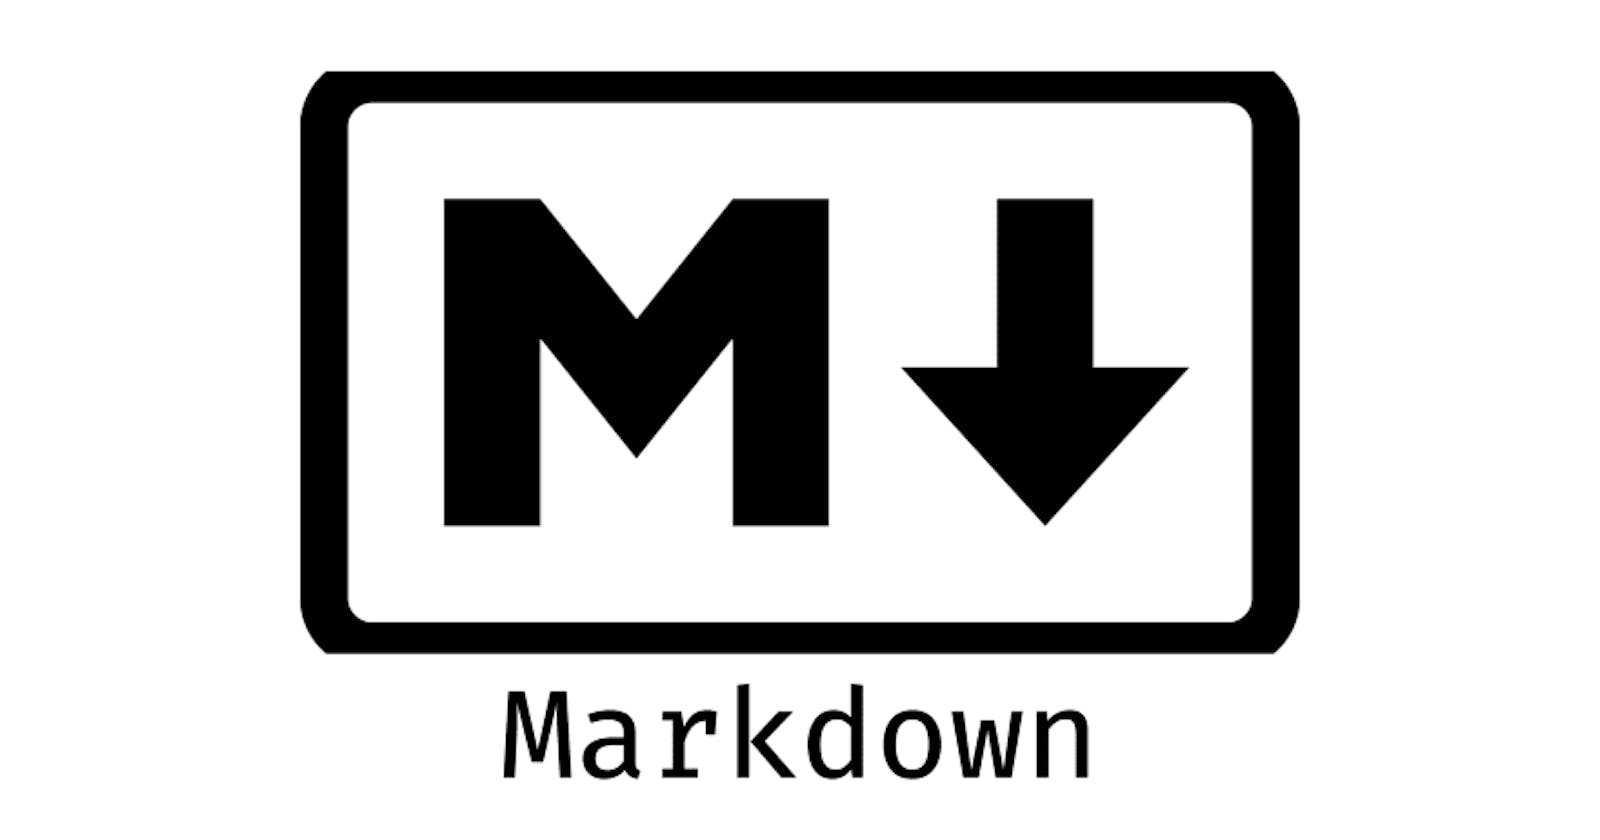 Github Markdown Style Guide